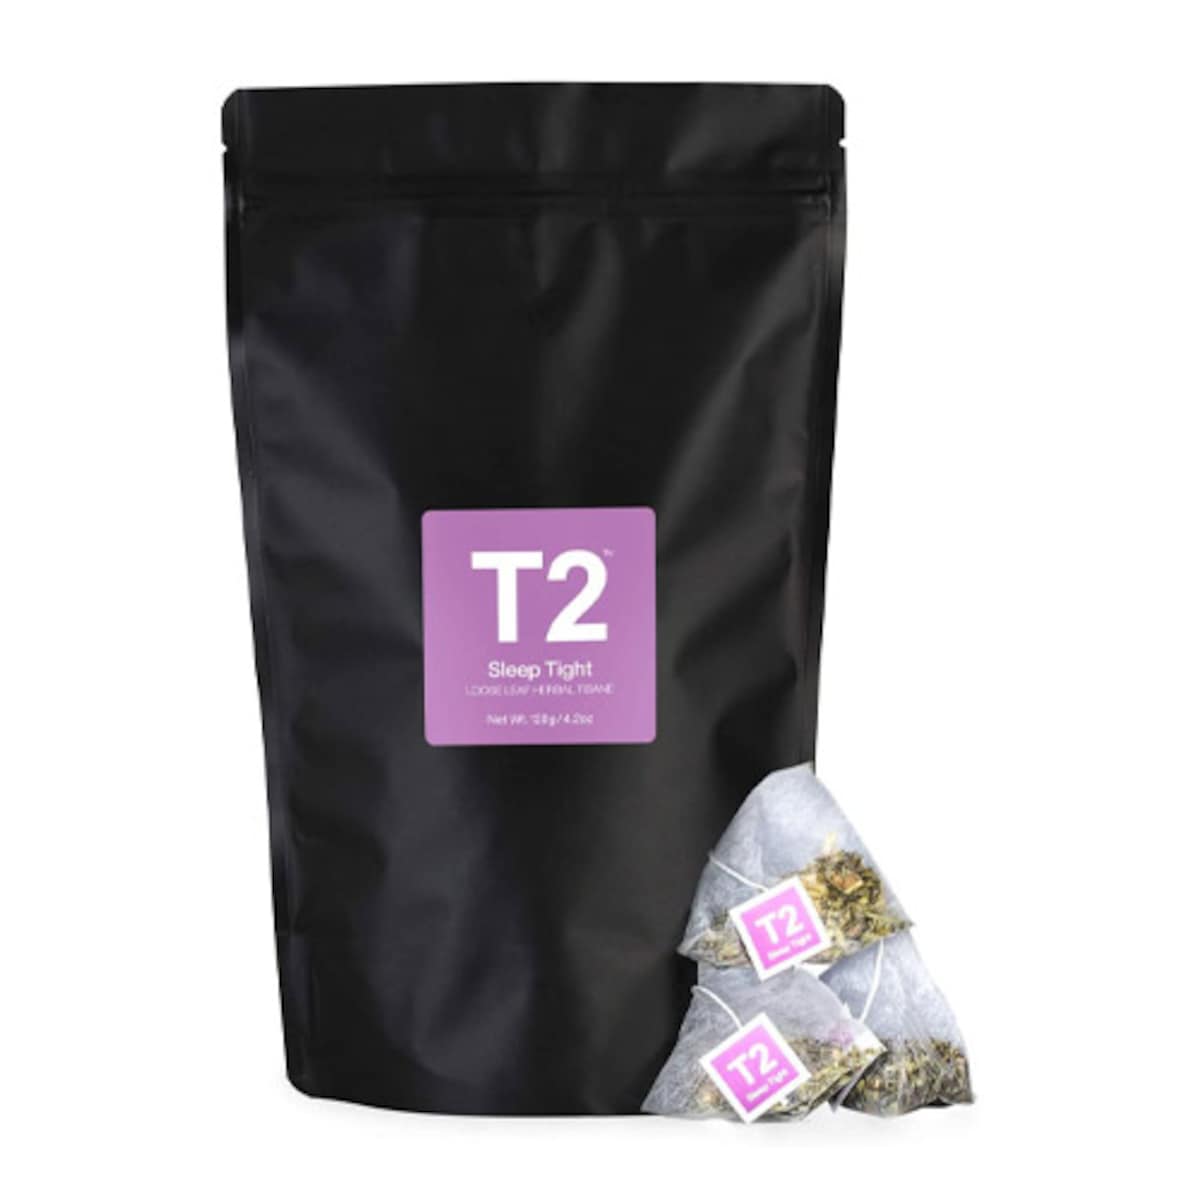 T2 Sleep Tight Teabags 60 Pack